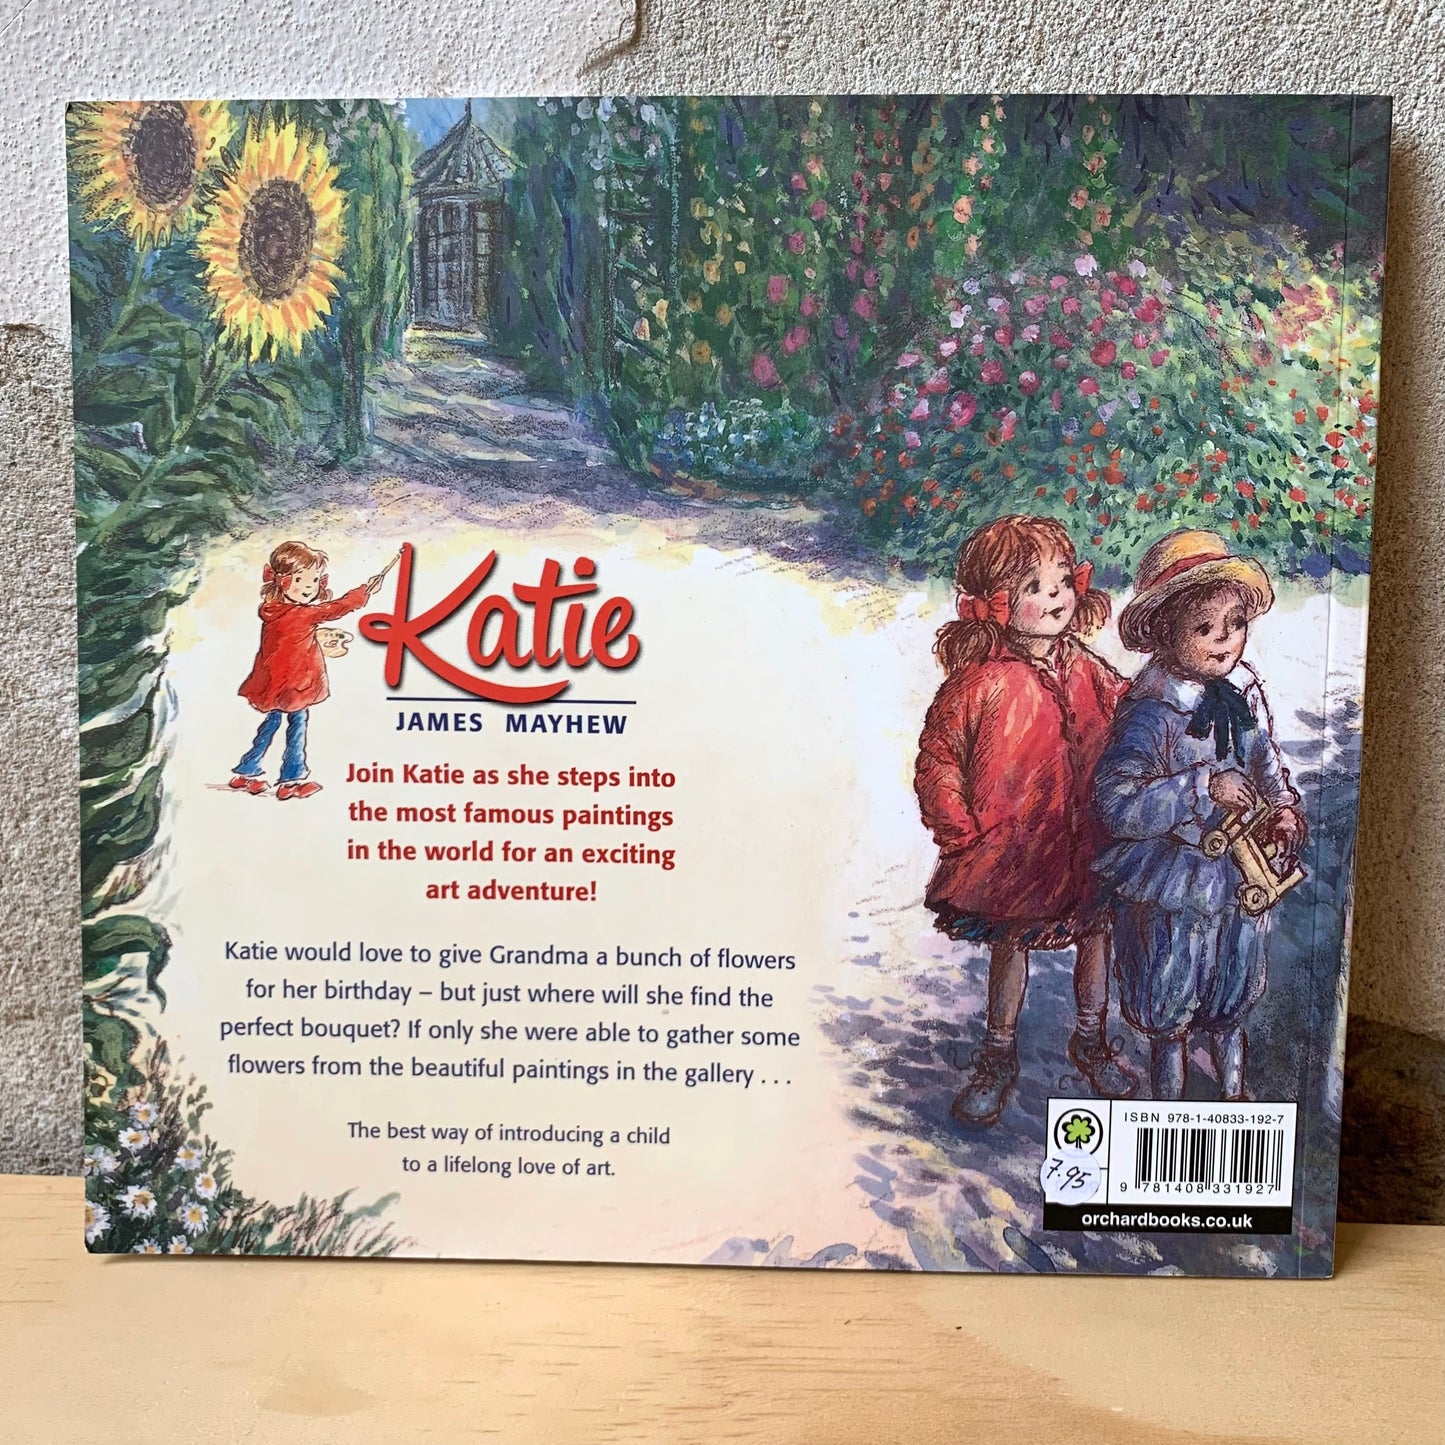 Katie and the Impressionists – James Mayhew